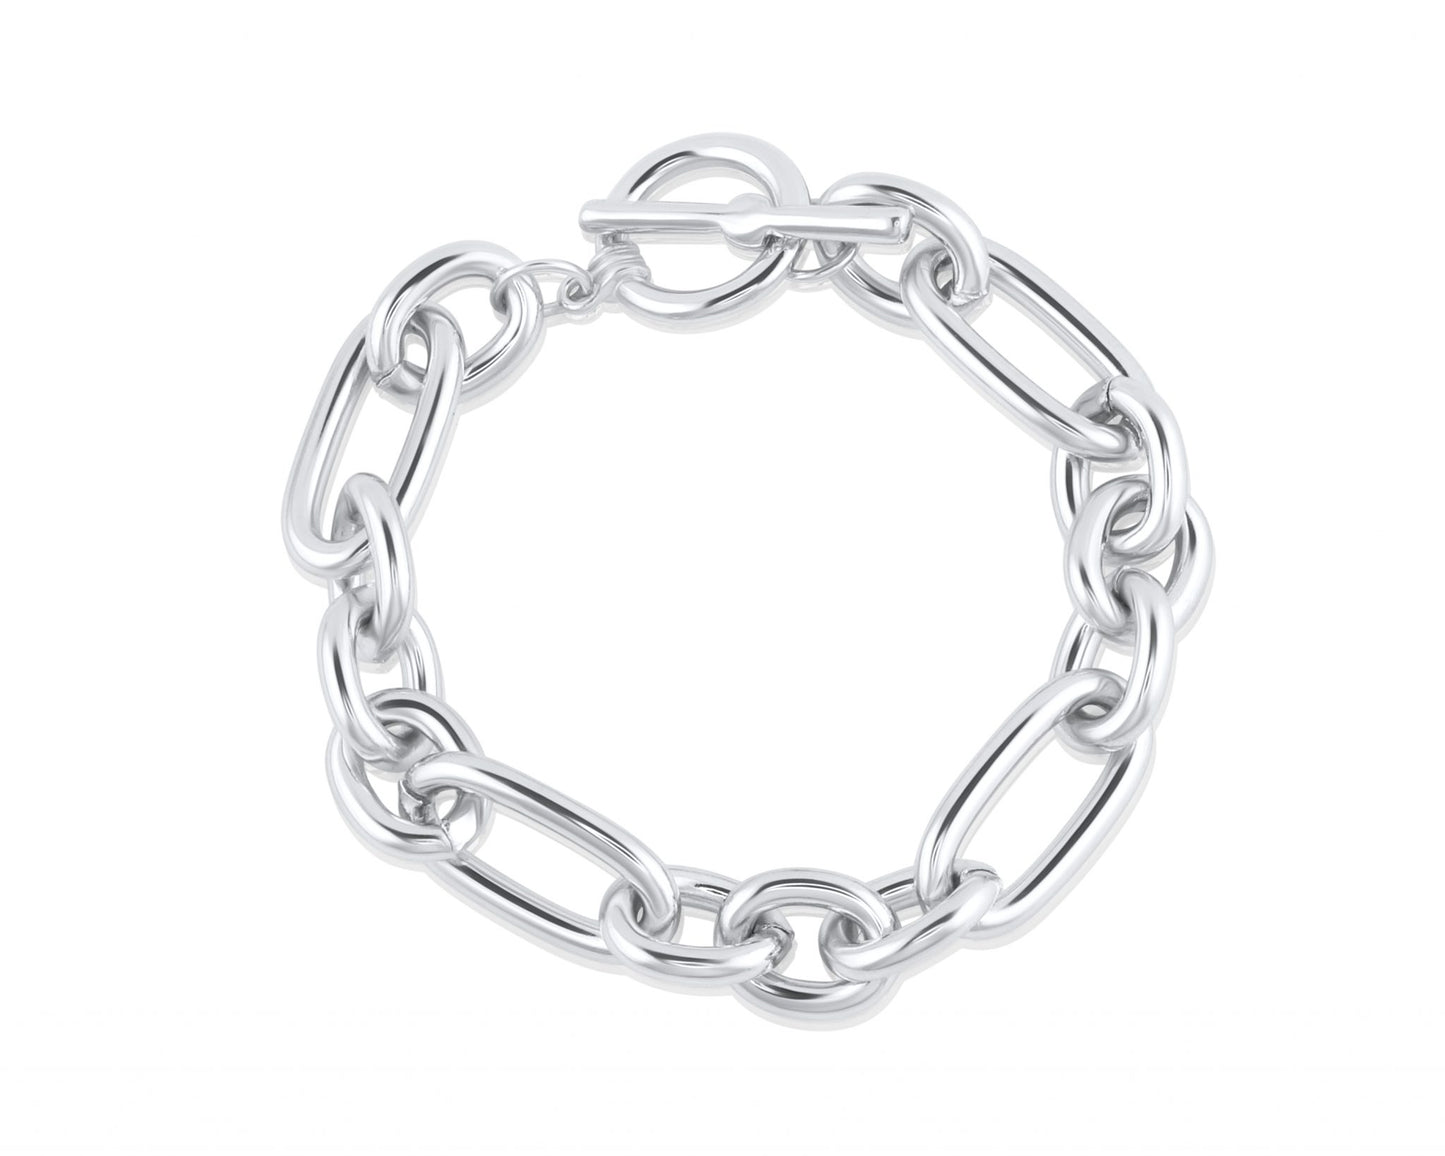 Maude oval links t-bar statement bracelet - gold or silver